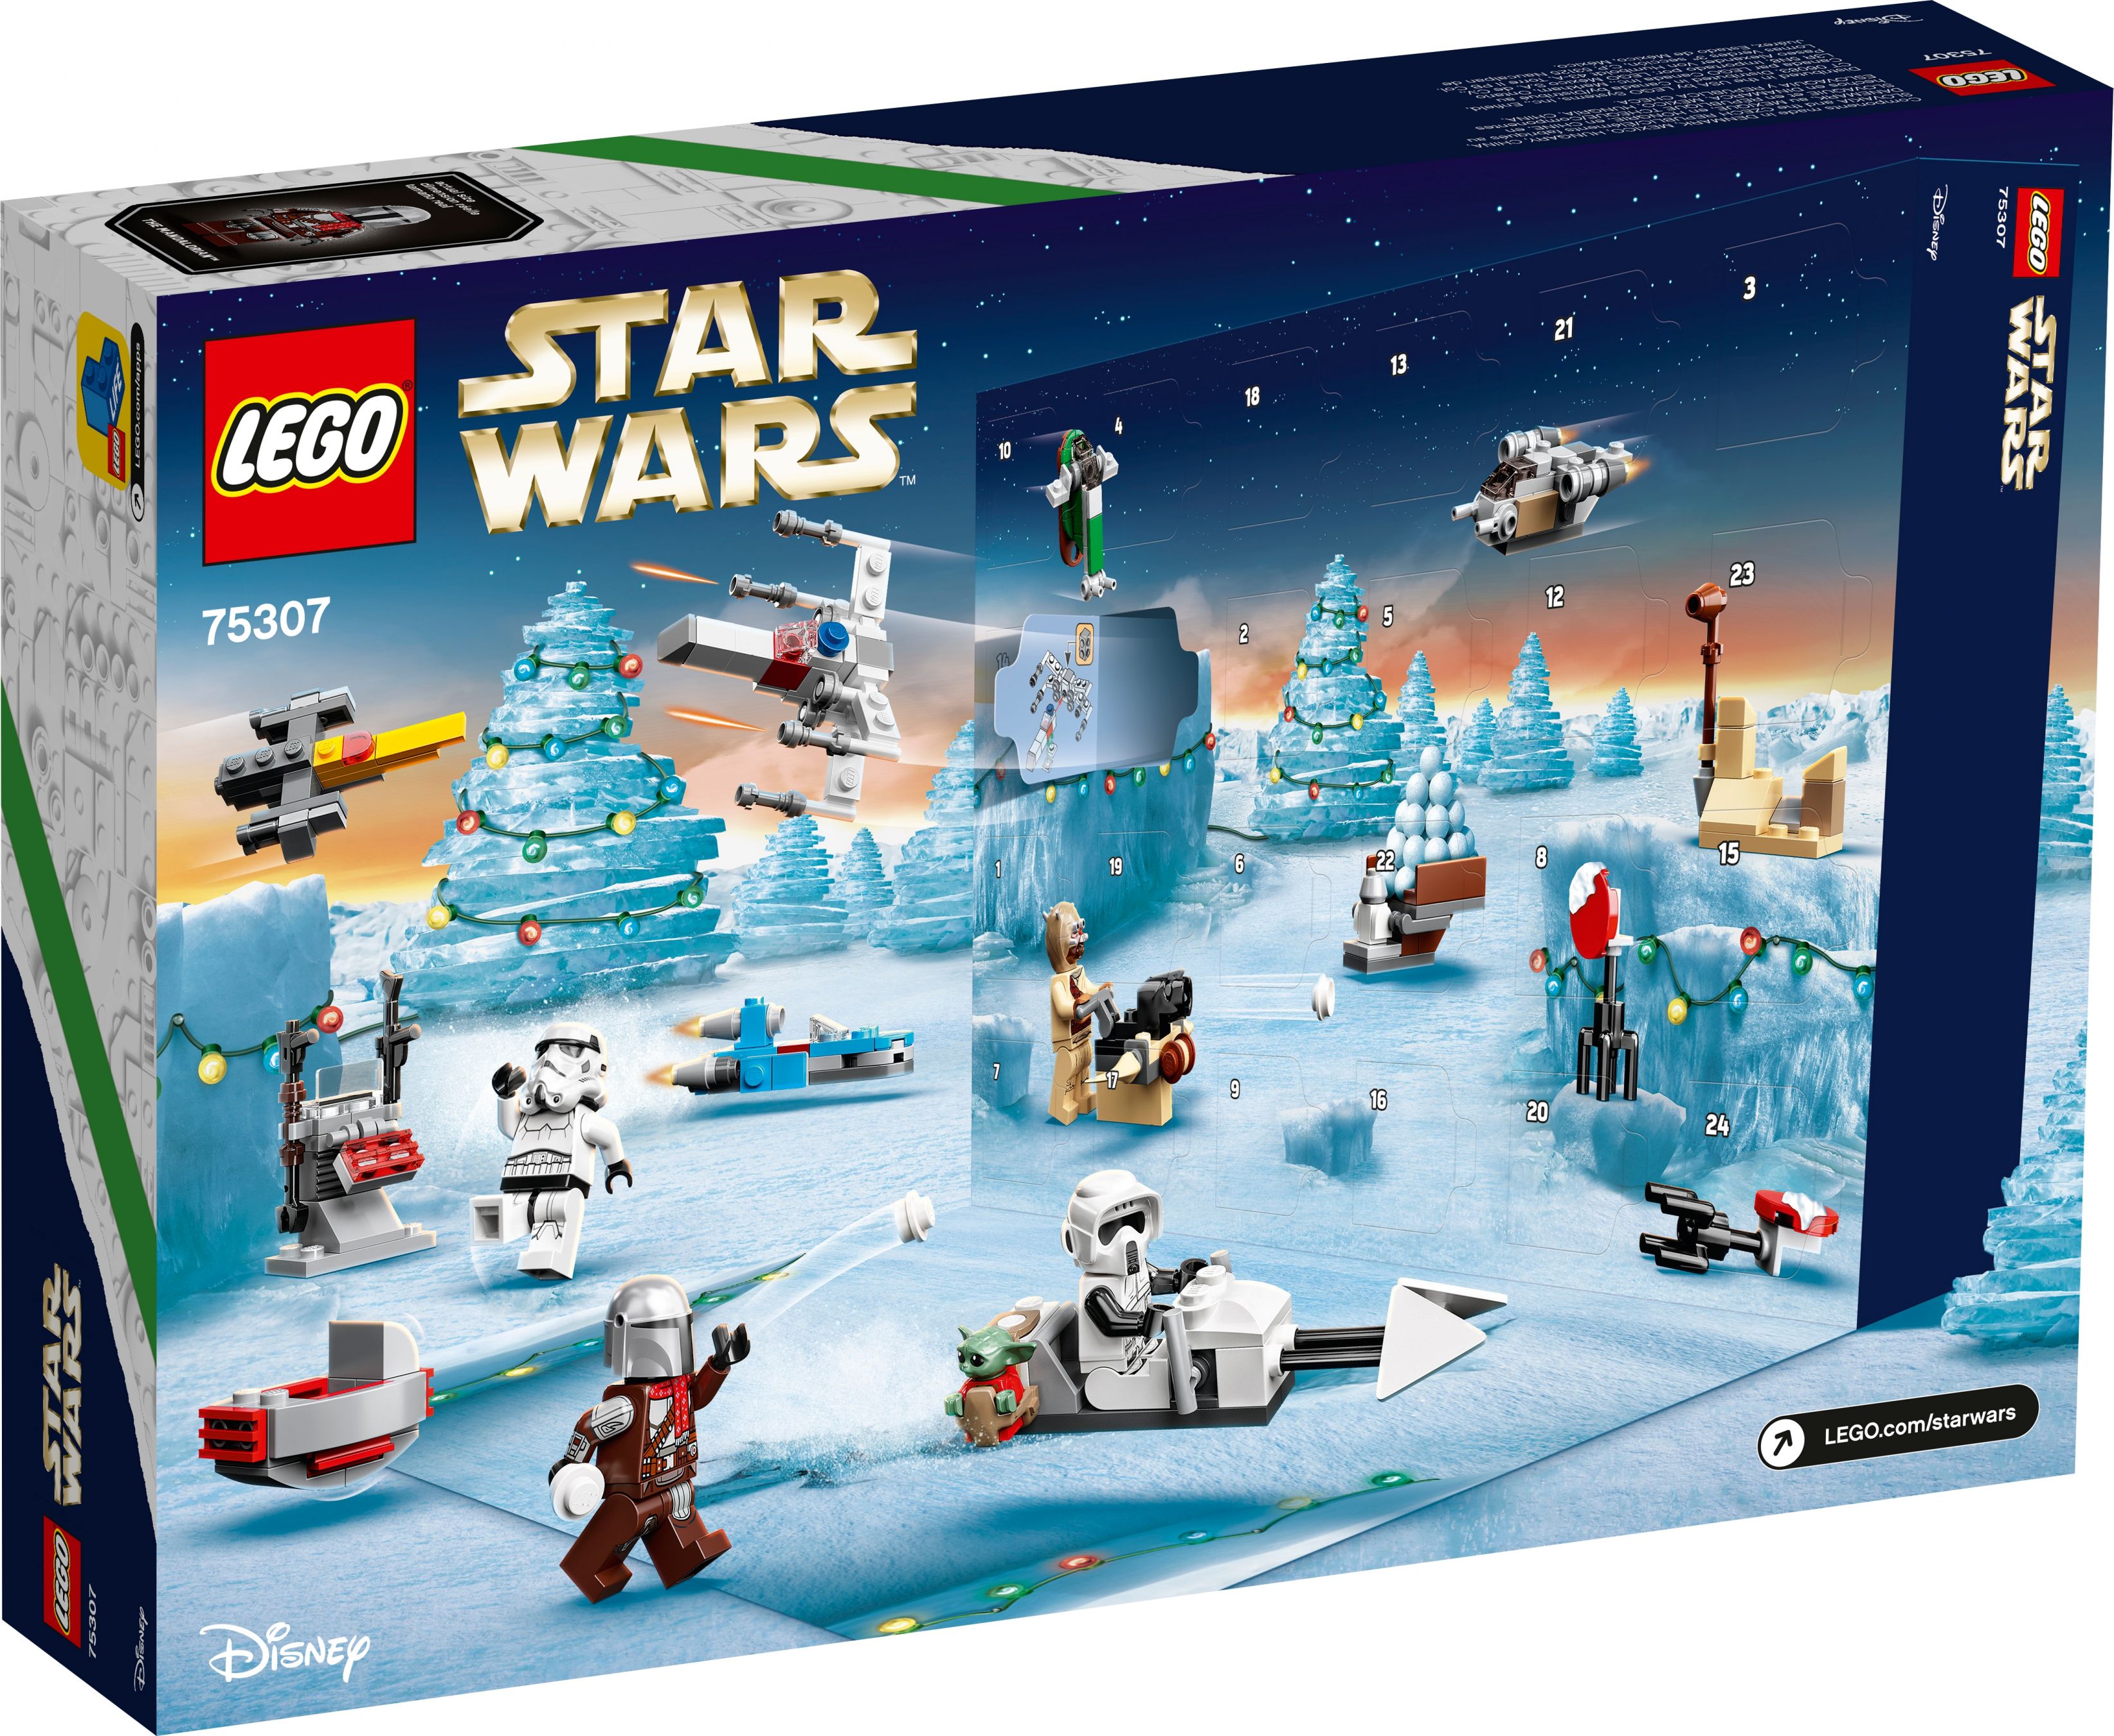 LEGO Star Wars 75307 Adventskalender 2021 LEGO_75307_alt5.jpg